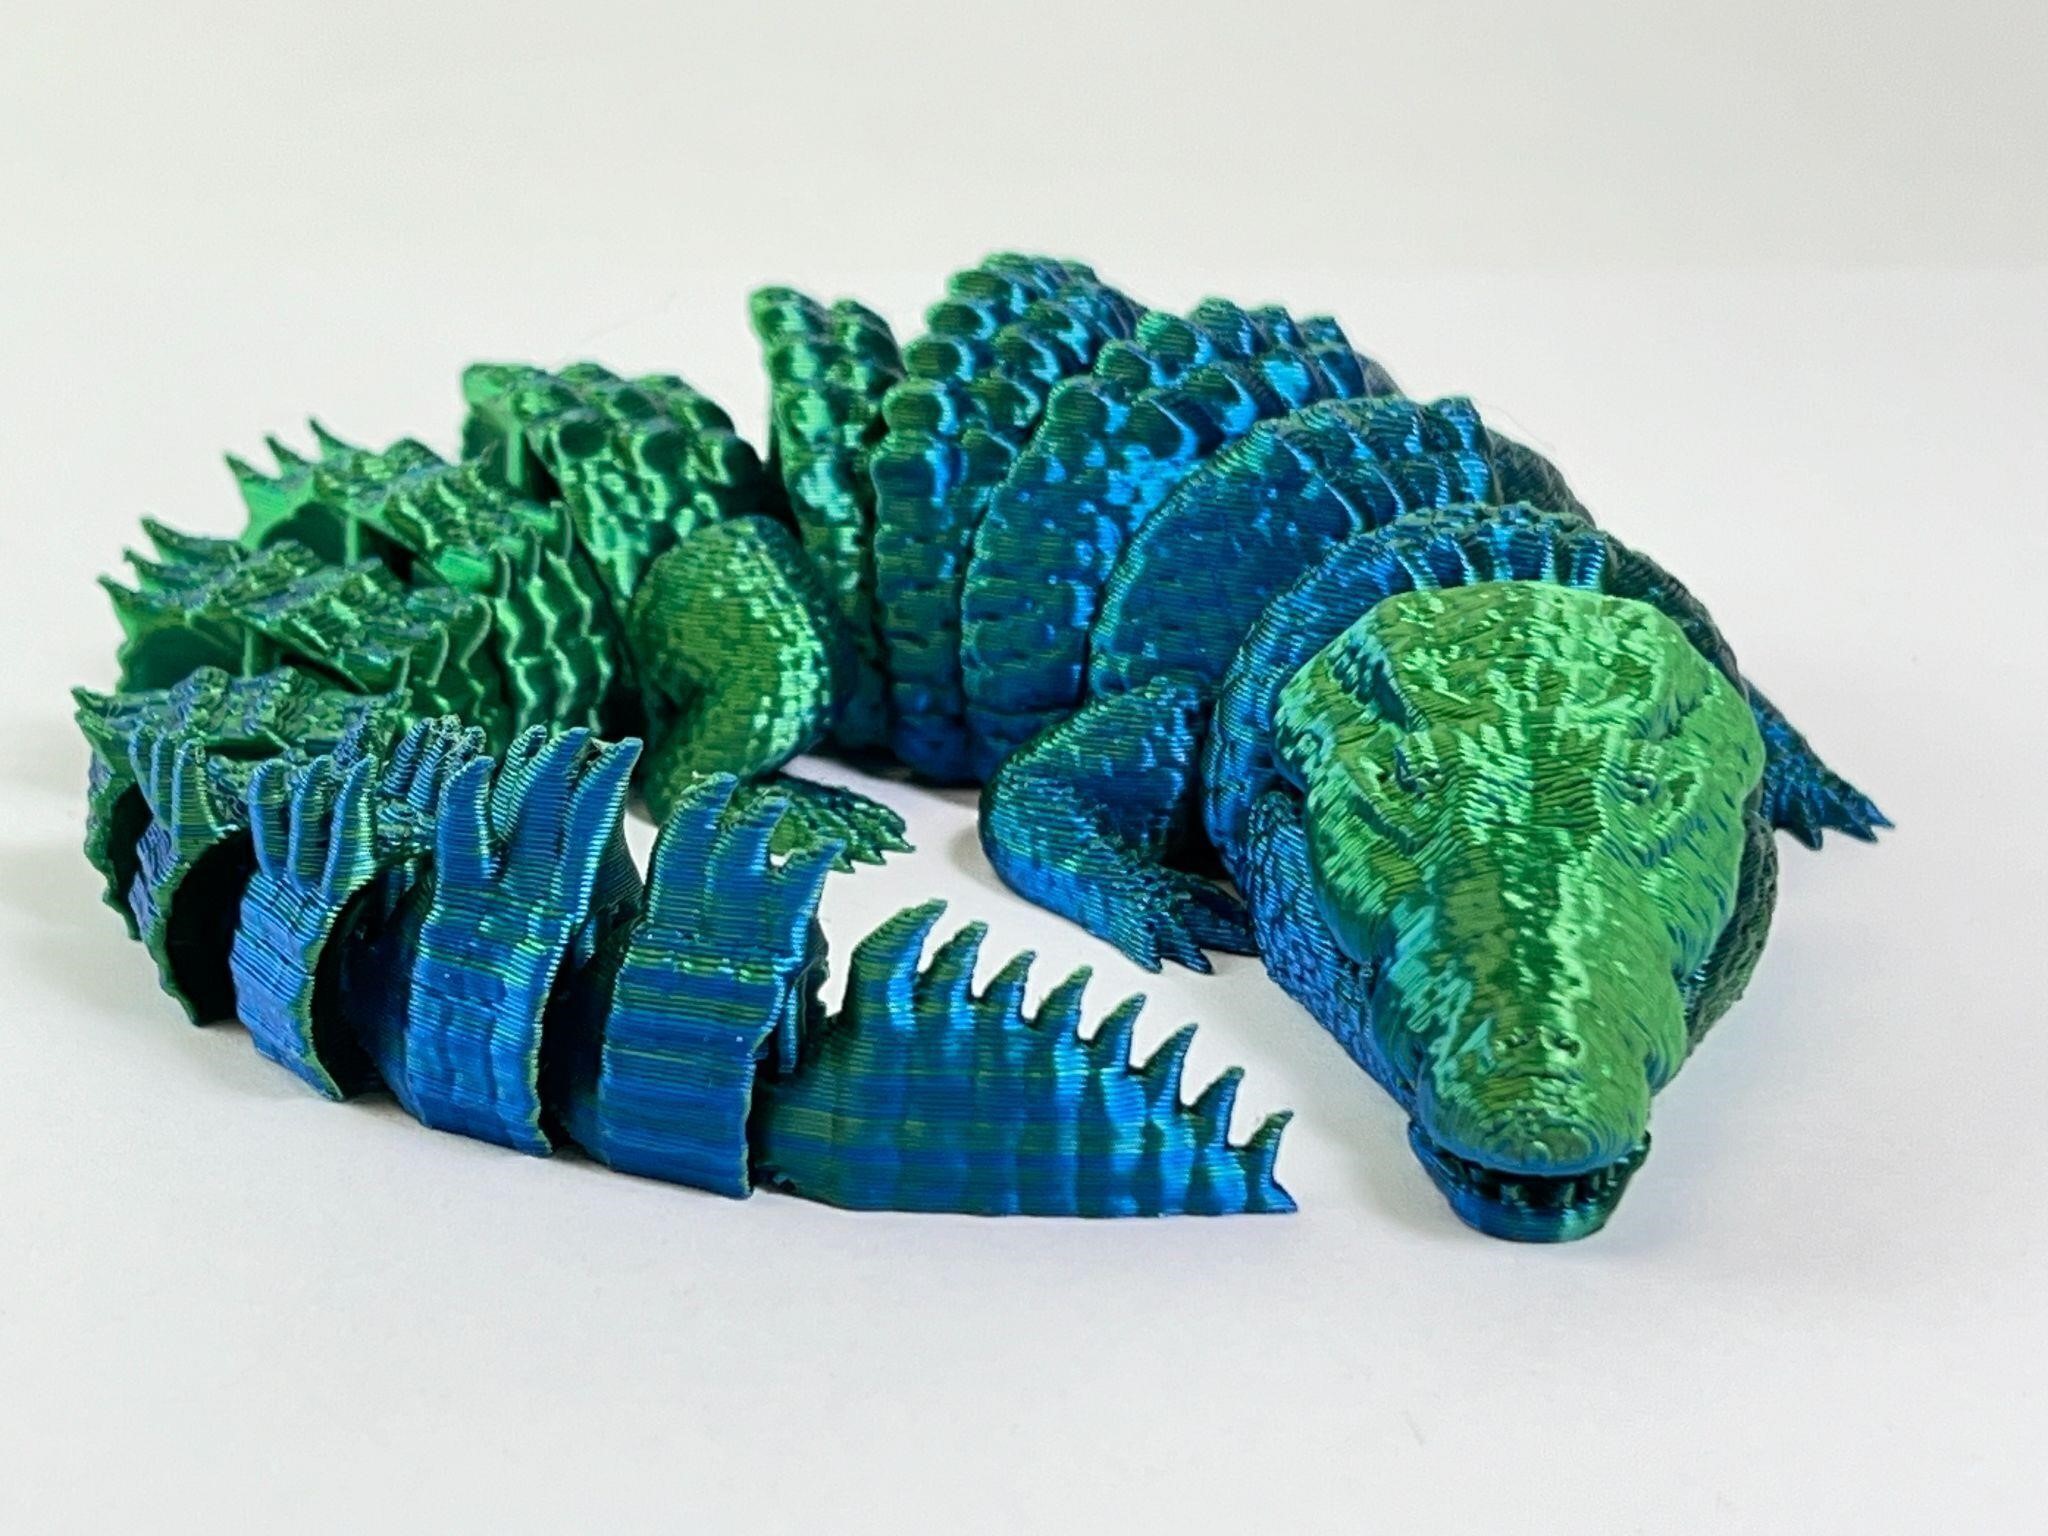 3D Printer Made Alligator (Takes 9 Hrs to Make)